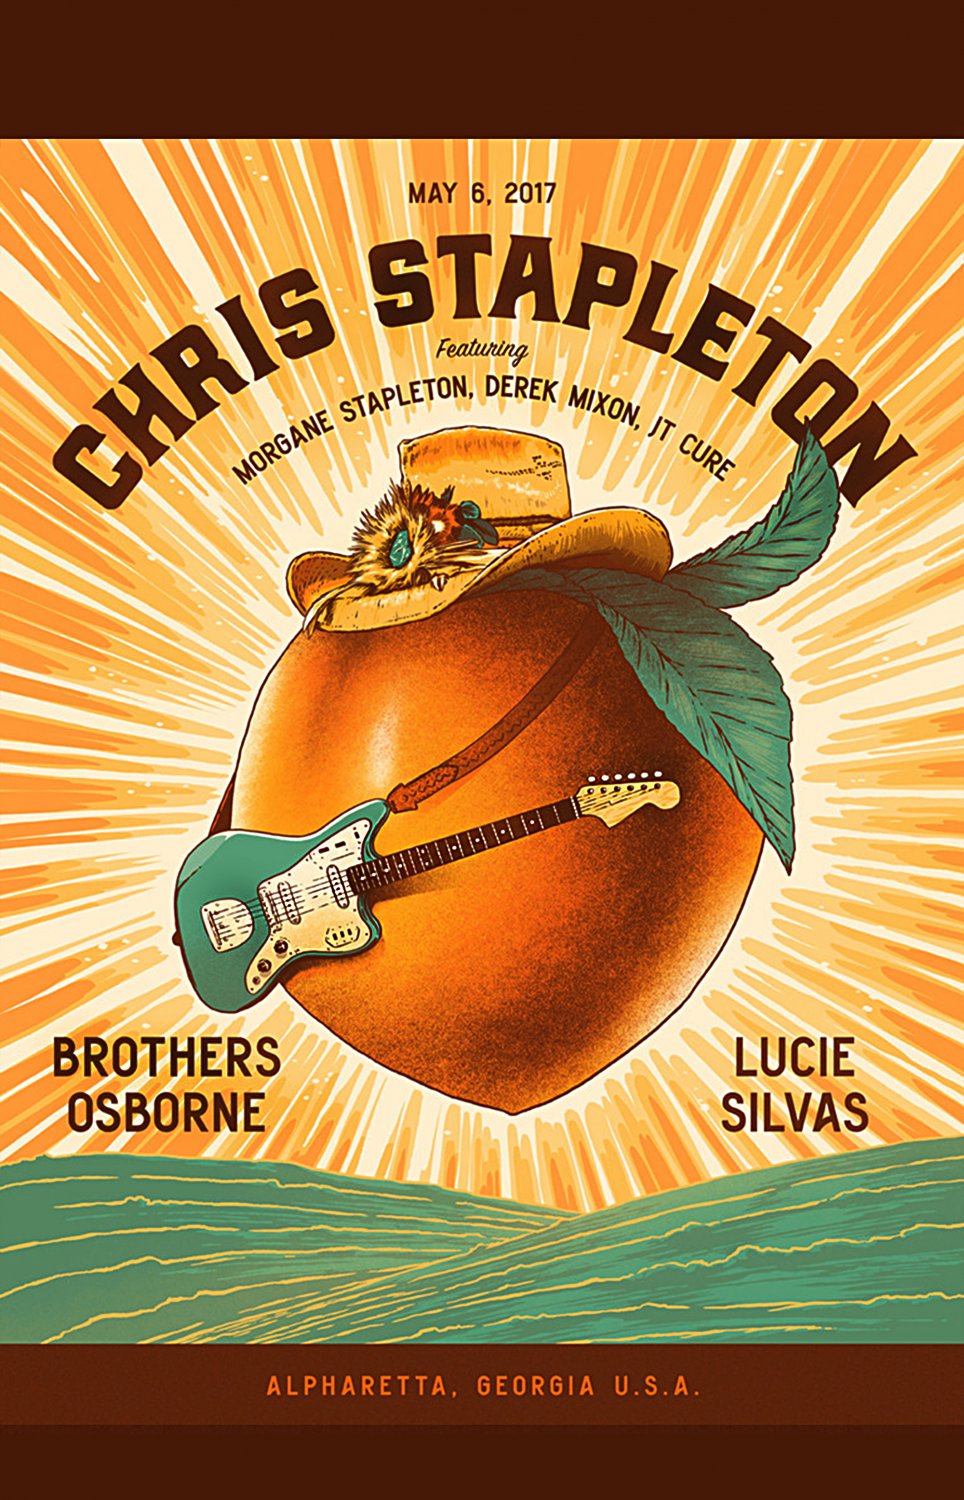 Chris Stapleton Brothers Osborne Lucie Silvas Concert 13"x19" (32cm/49cm) Polyester Fabric Poster